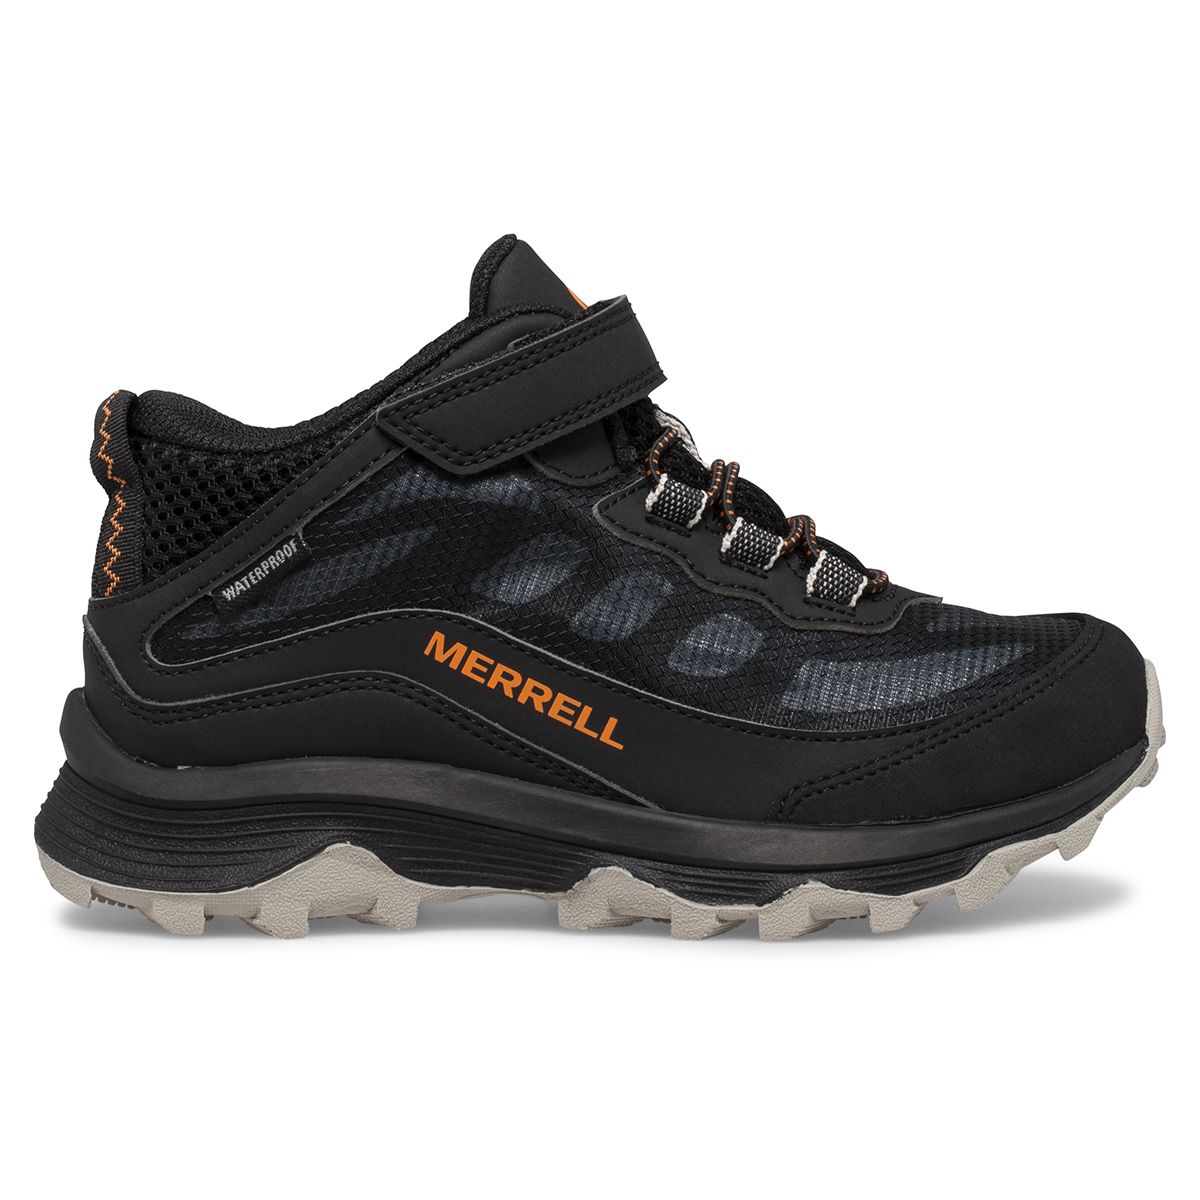 Moab Speed Mid A/C Waterproof - Boots BK | Merrell